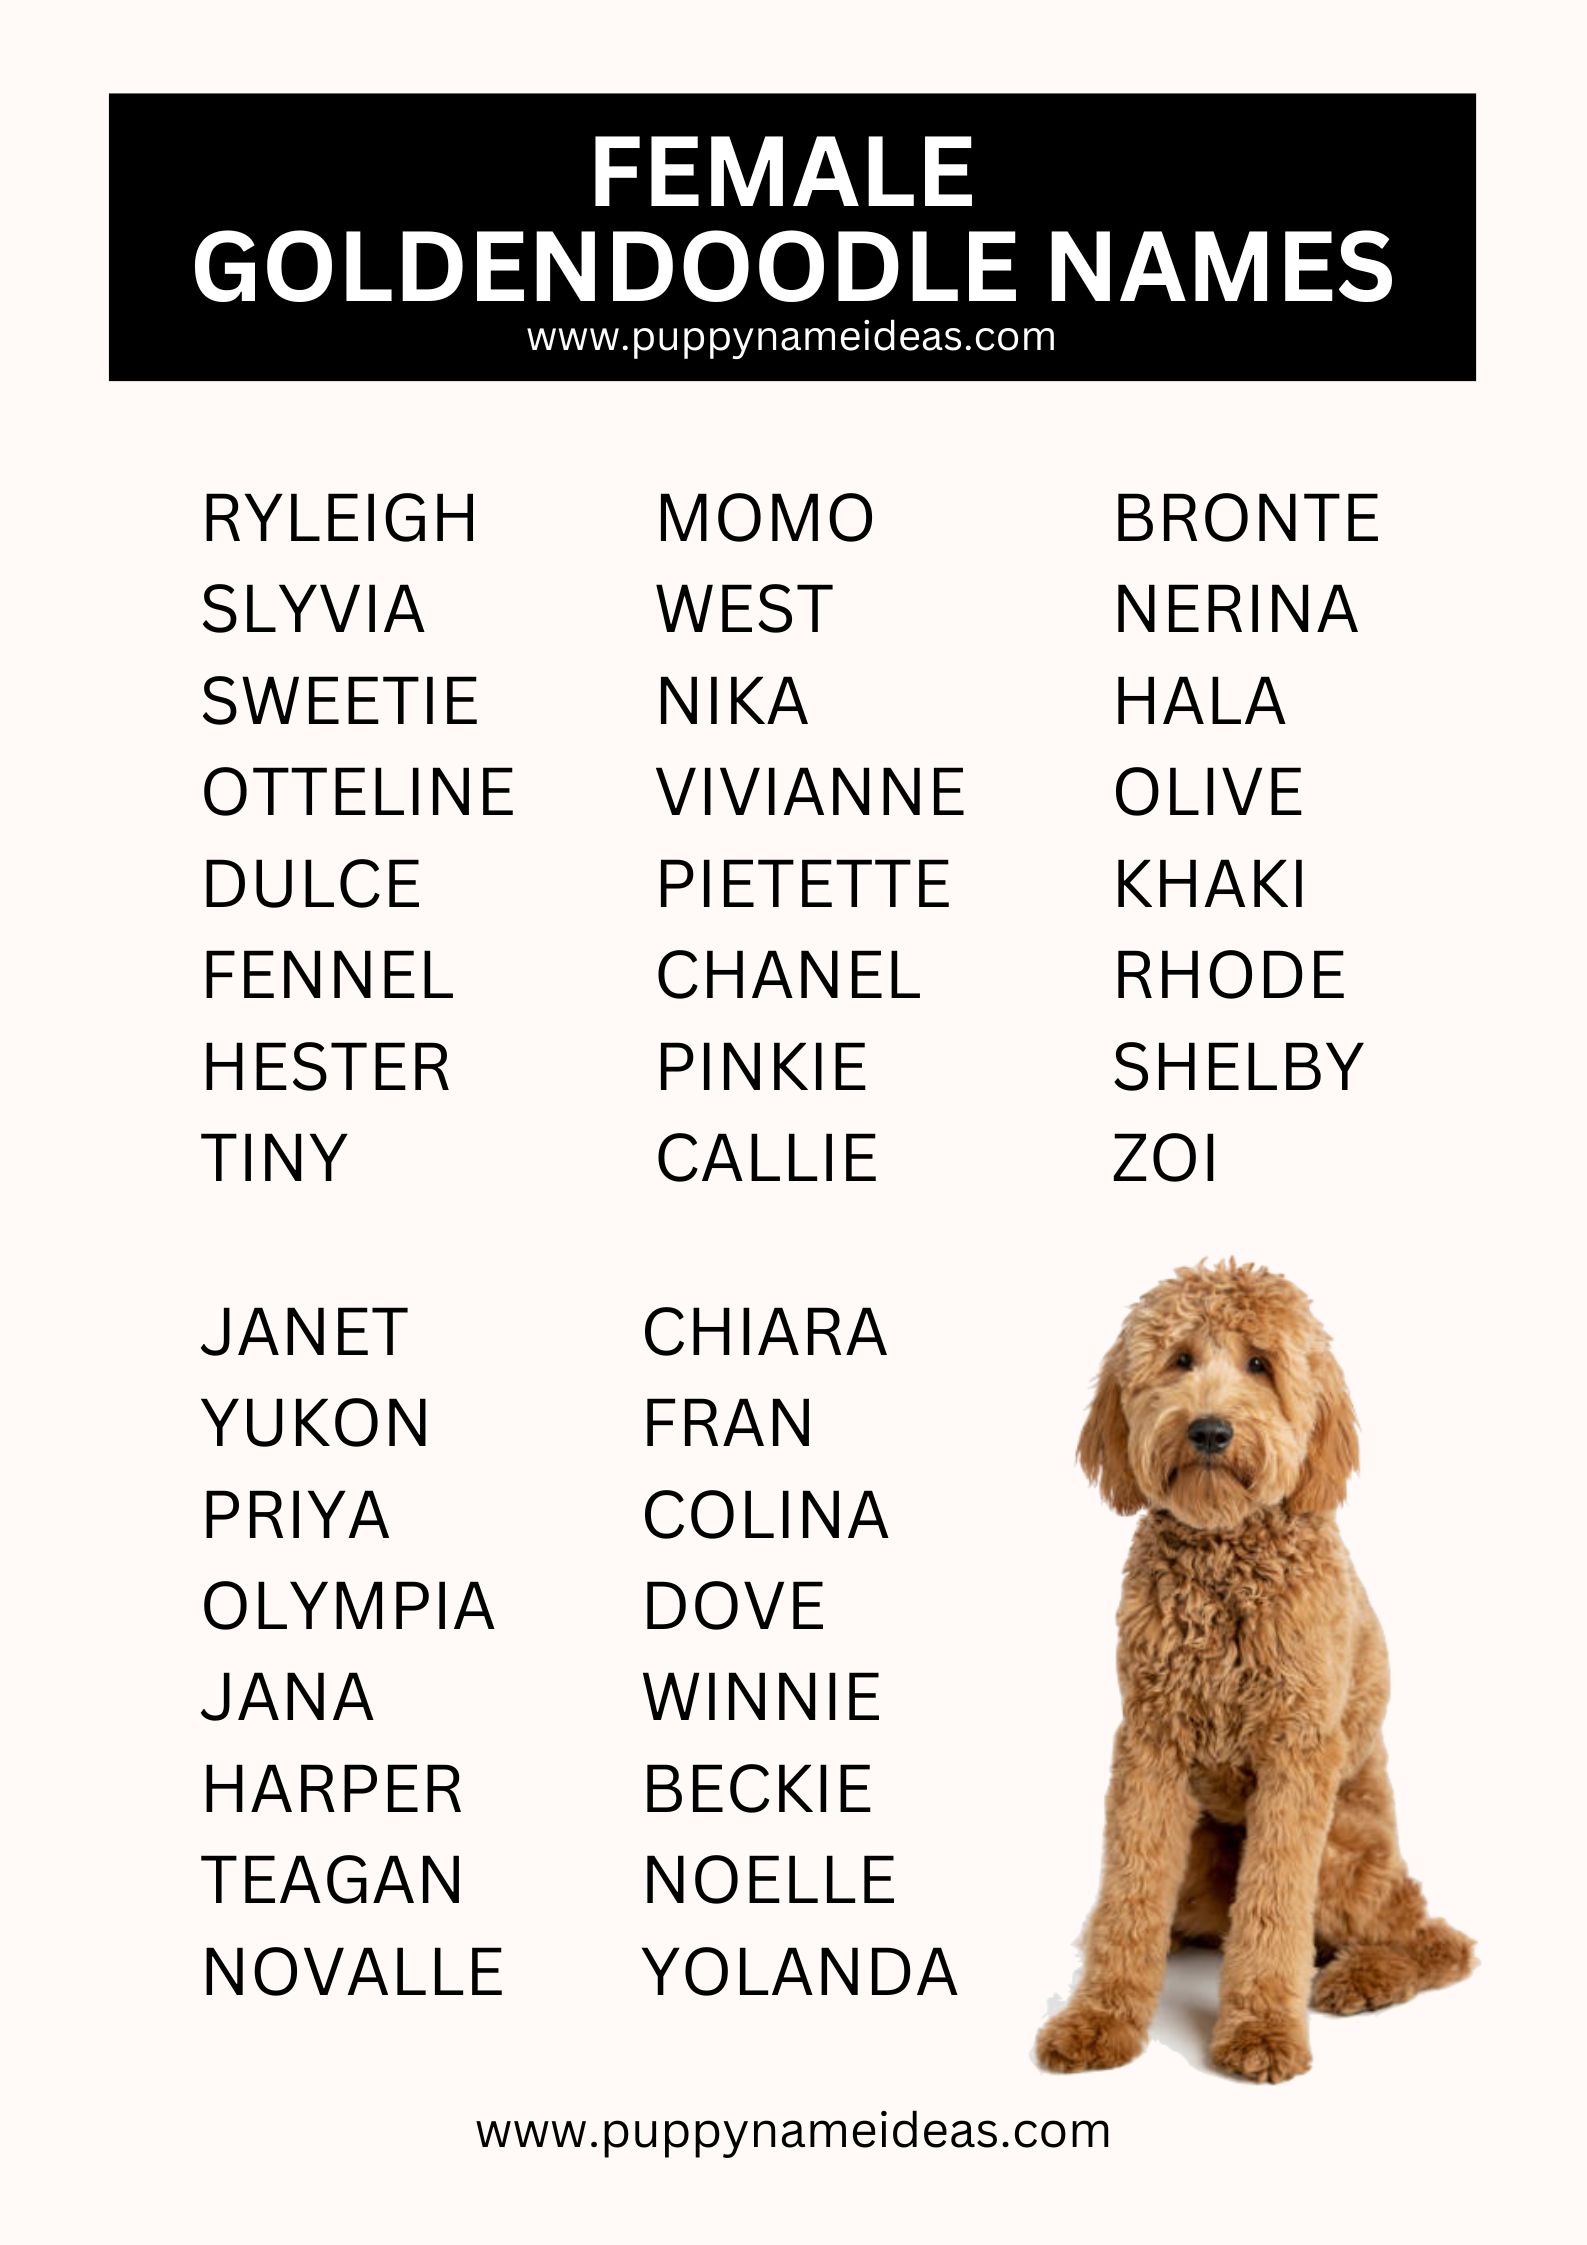 List Of Female Goldendoodle Names